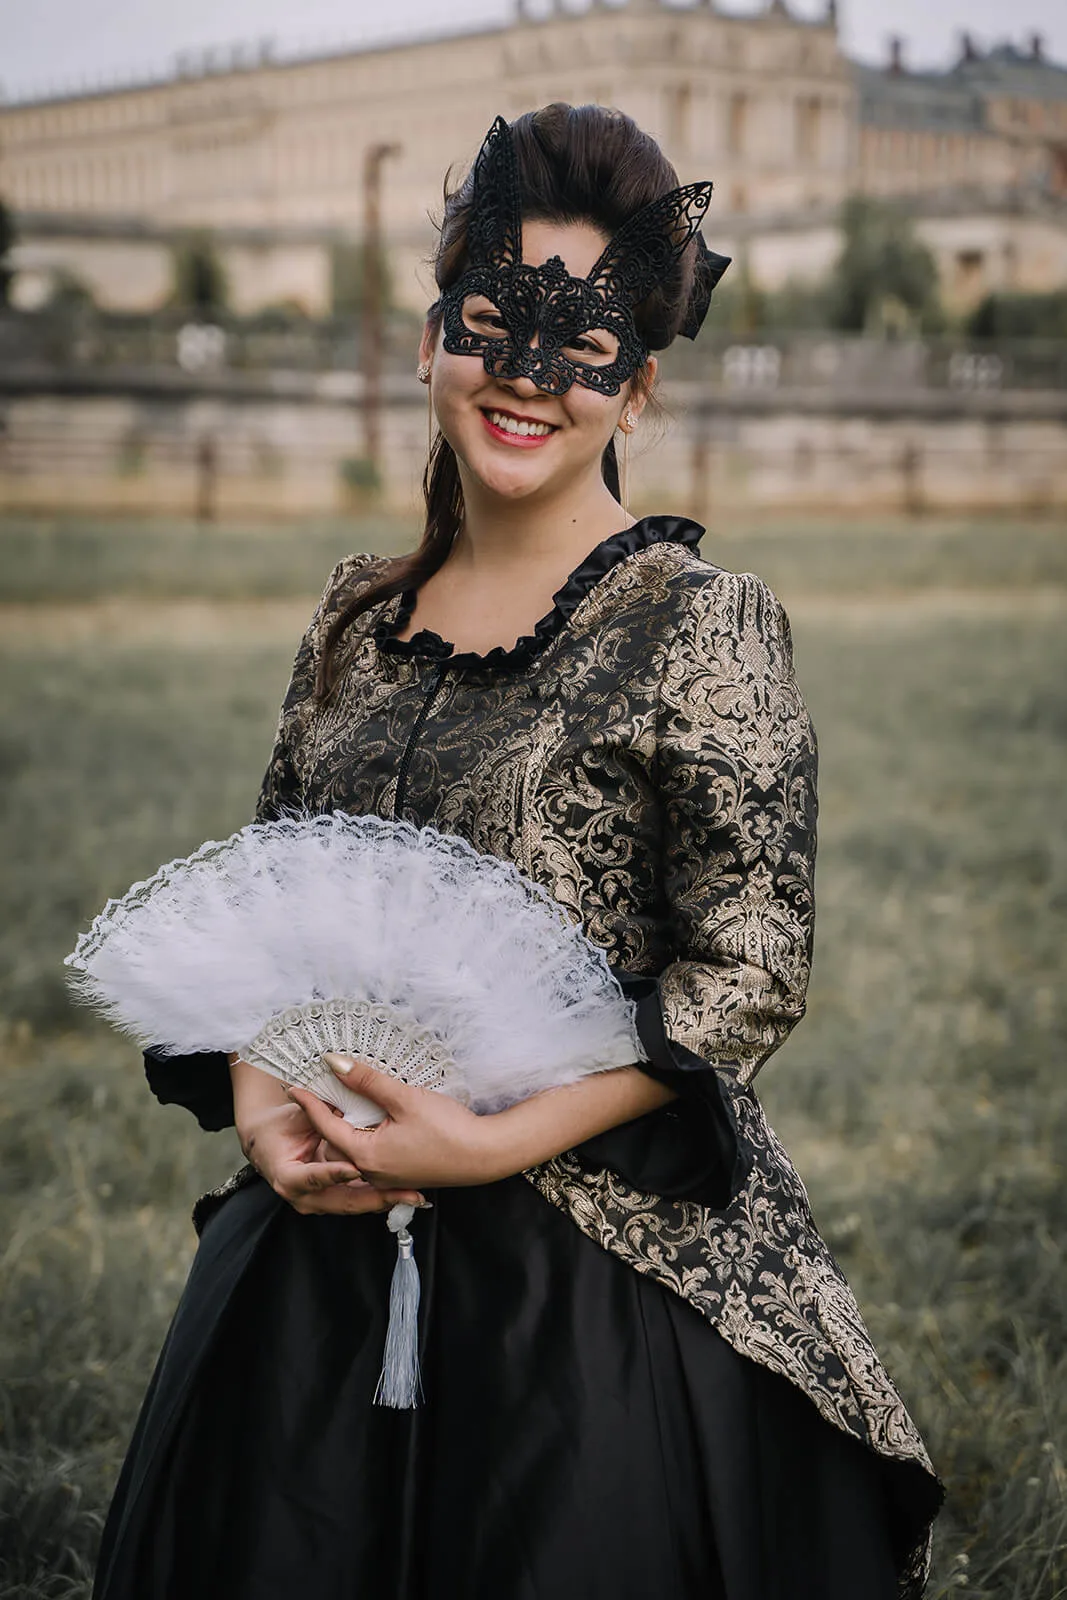 Masked Ball Versailles, France photos